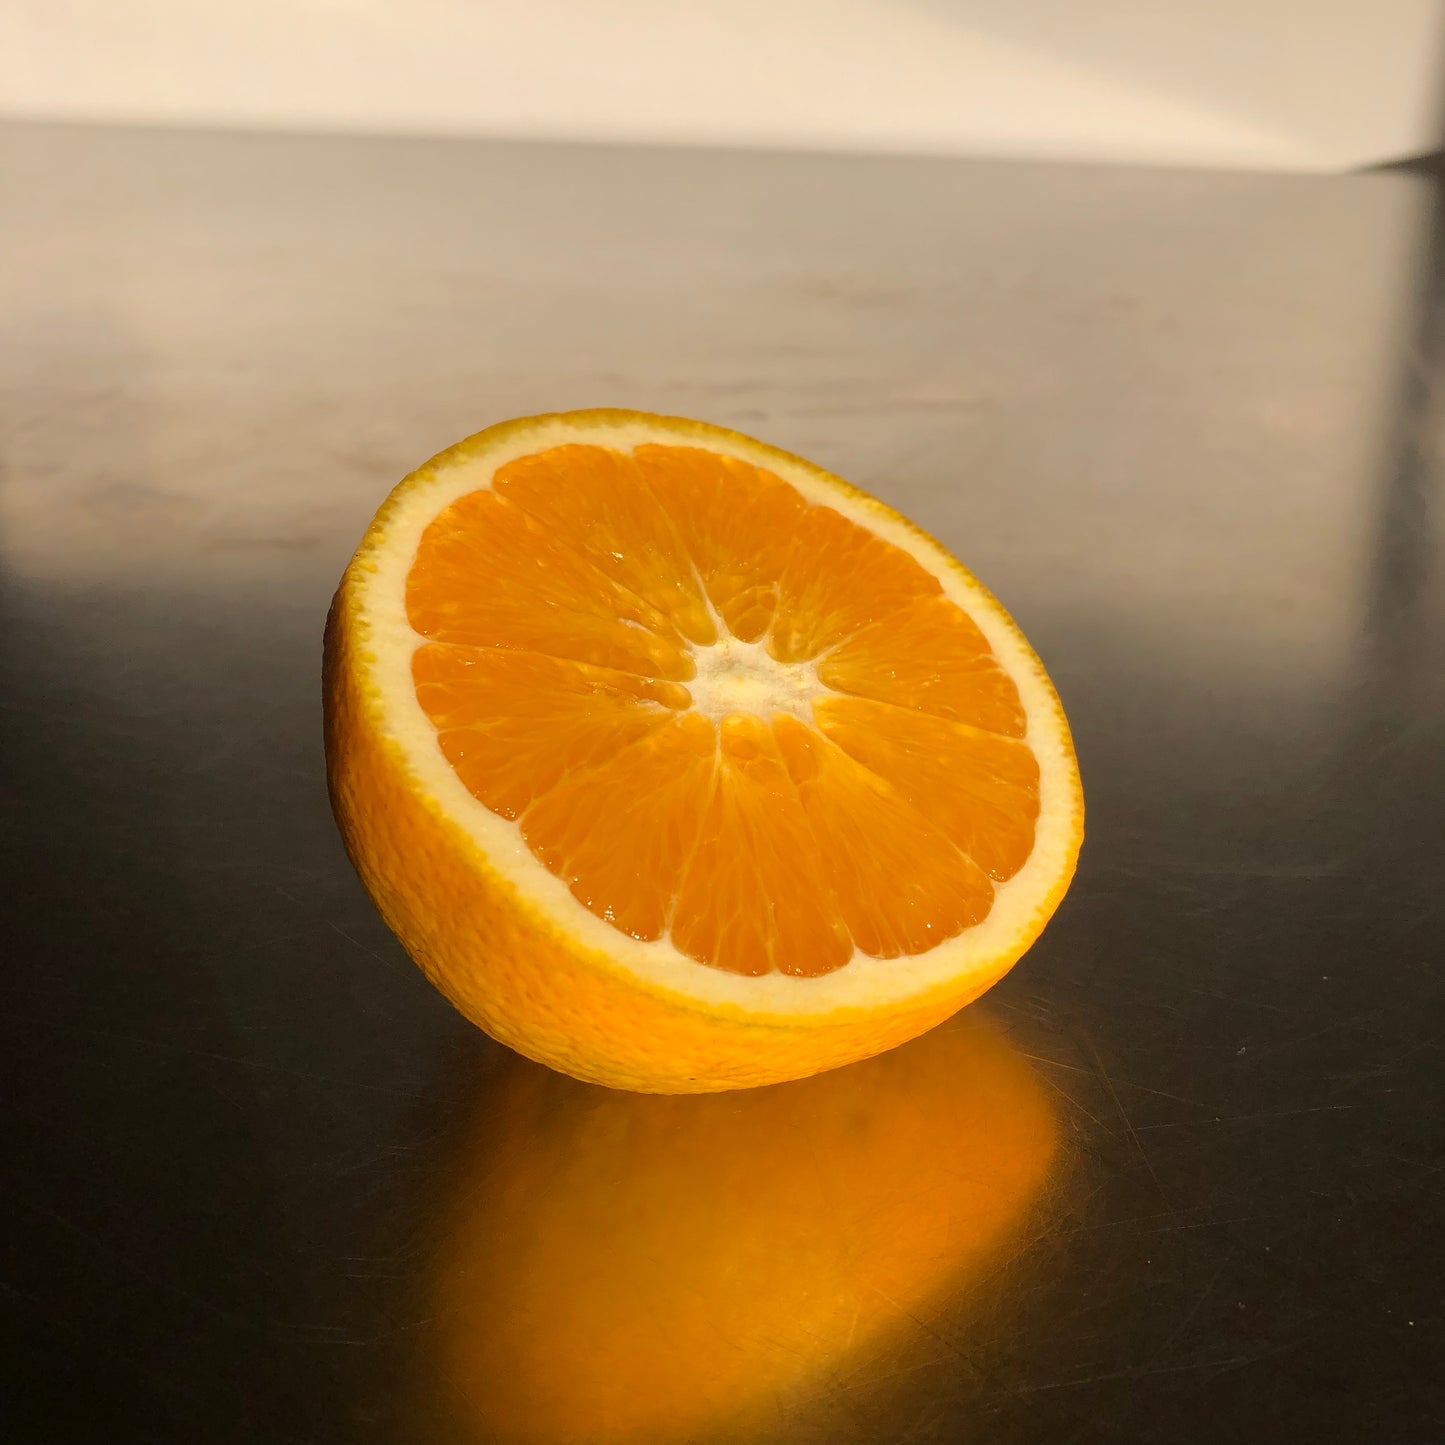 L’Orange (du Portugal)